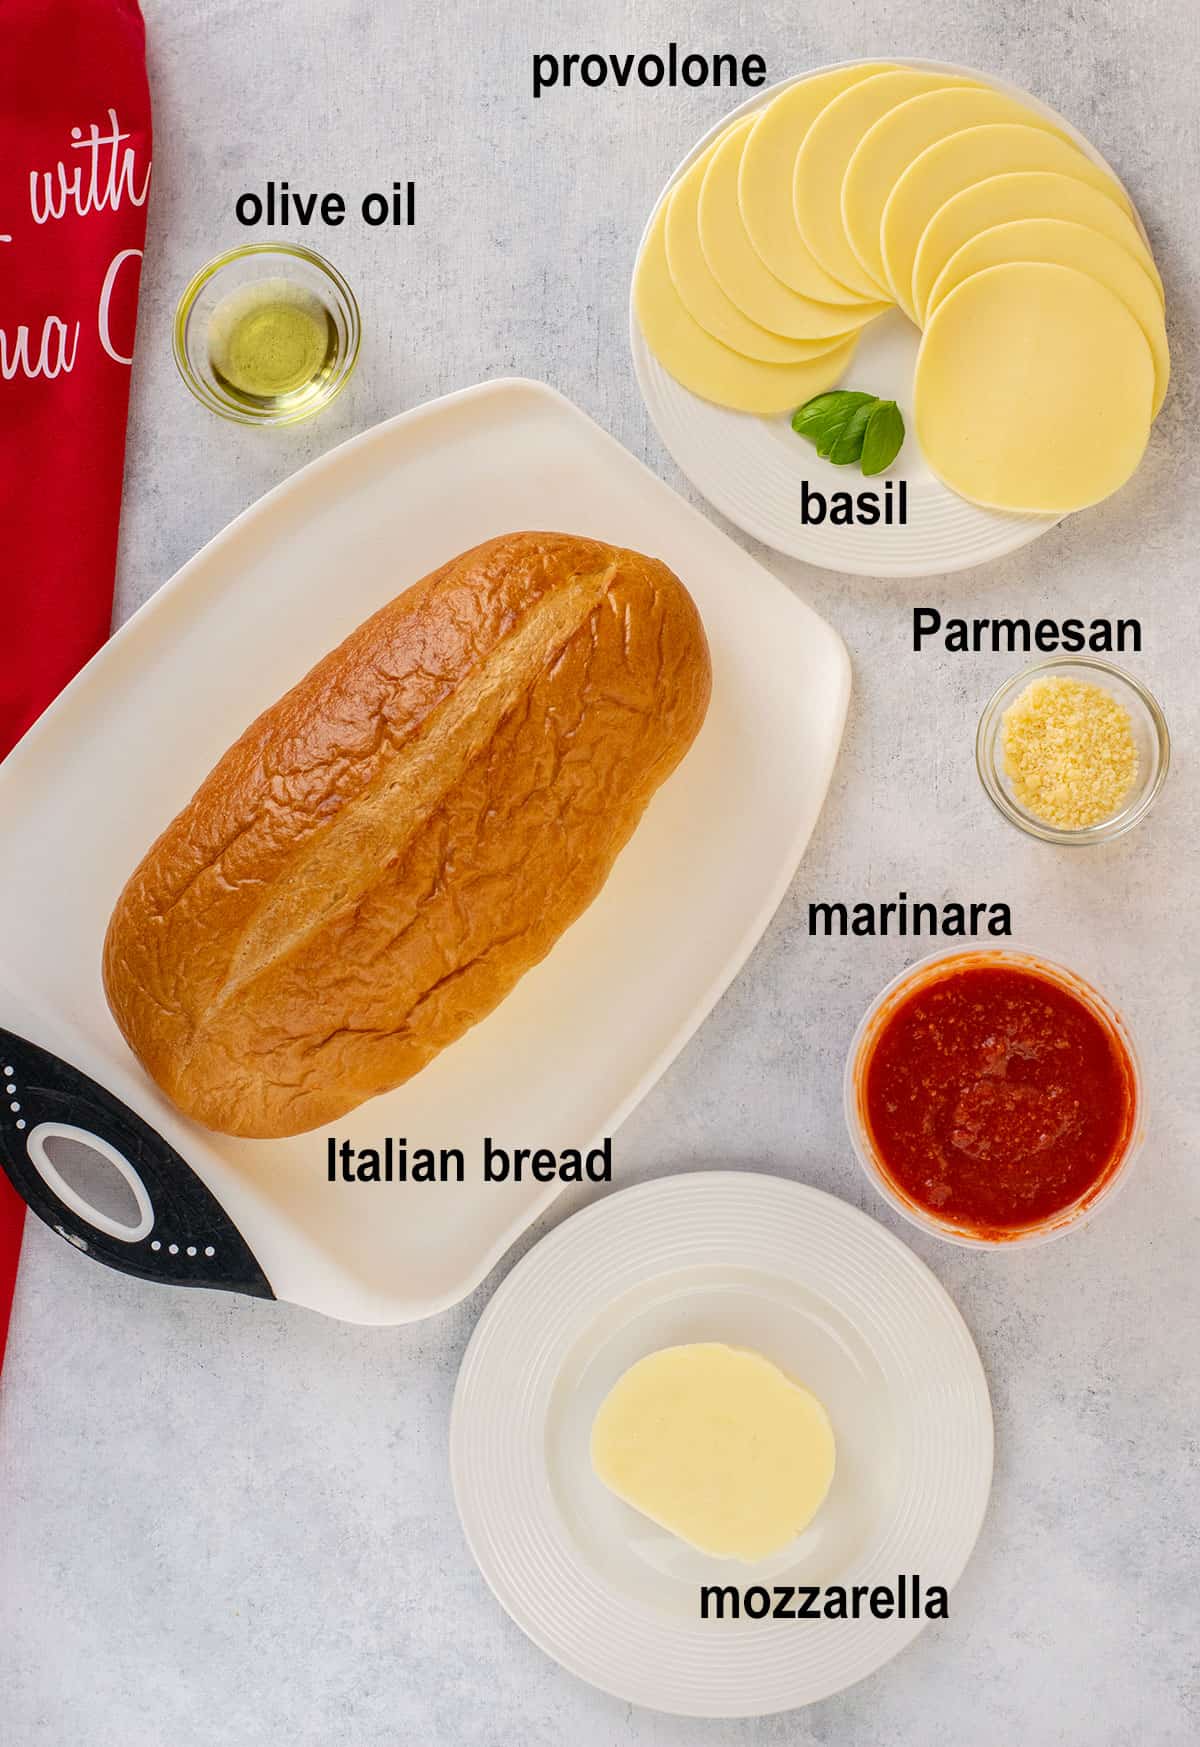 provolone, olive oil, basil, Parmesan, italian bread, marinara, mozzarella